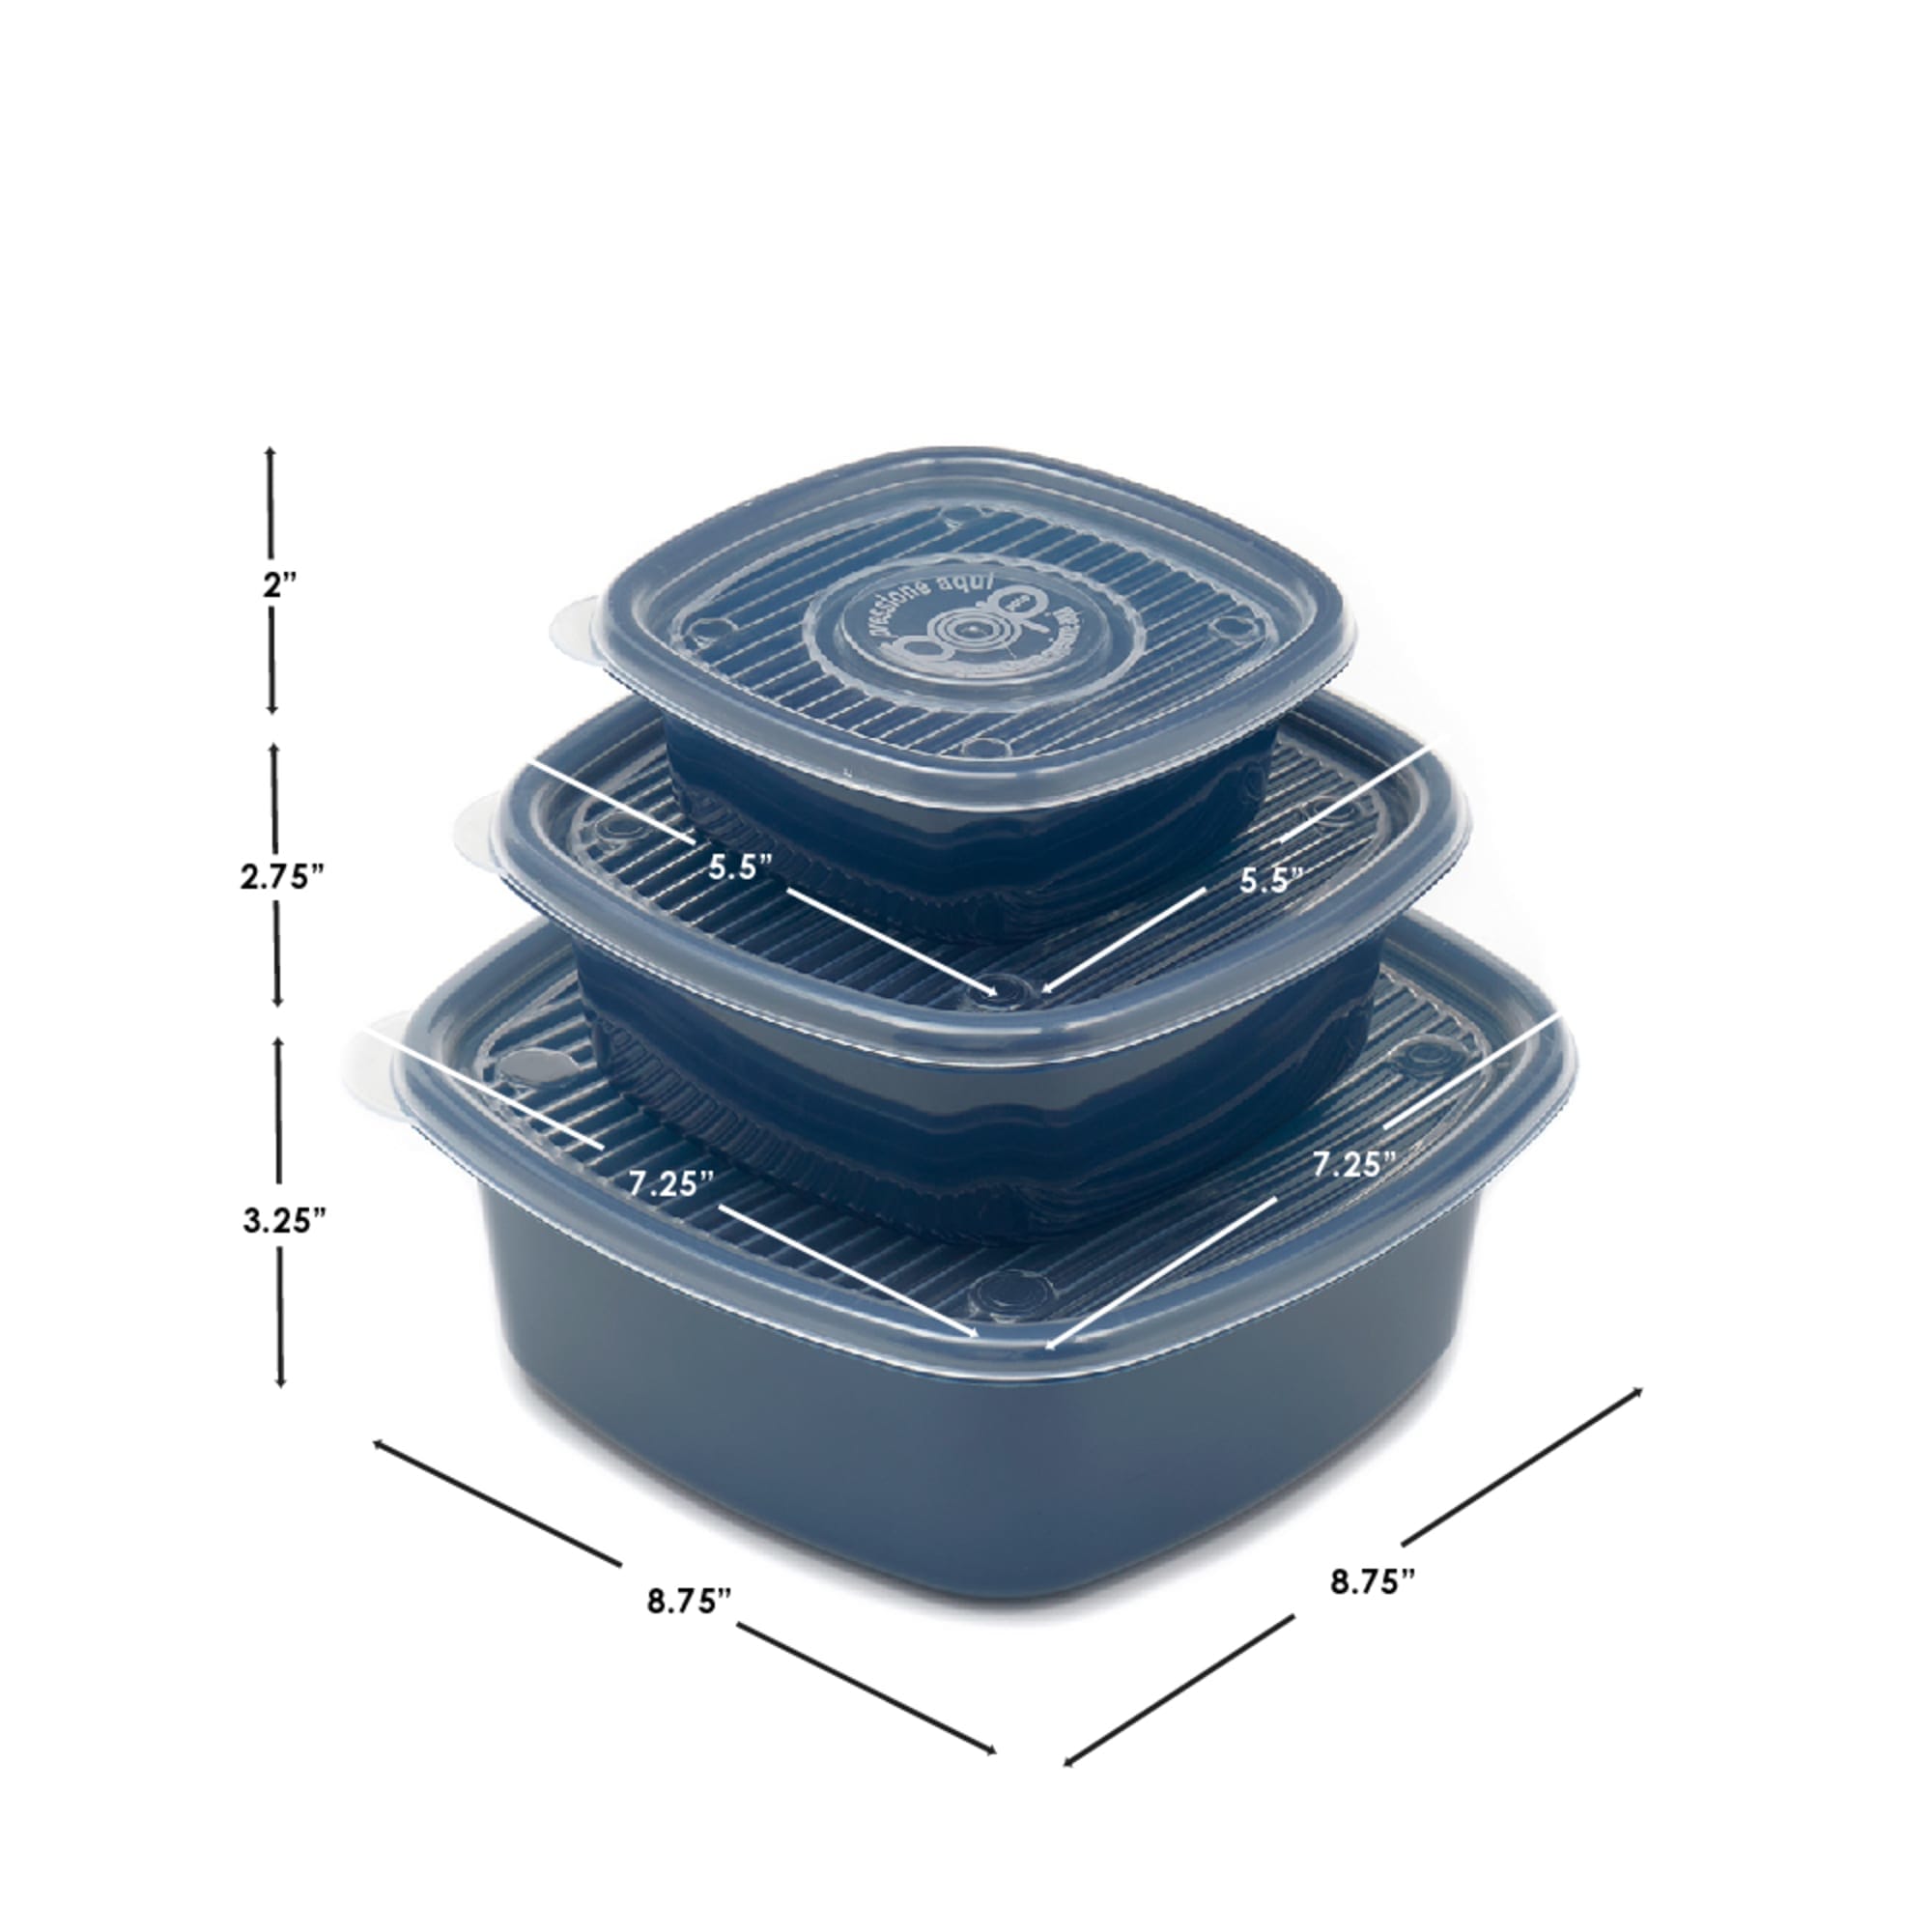 Home Basics 6 Piece Square Plastic Meal Prep Set, Blue $5.00 EACH, CASE PACK OF 8